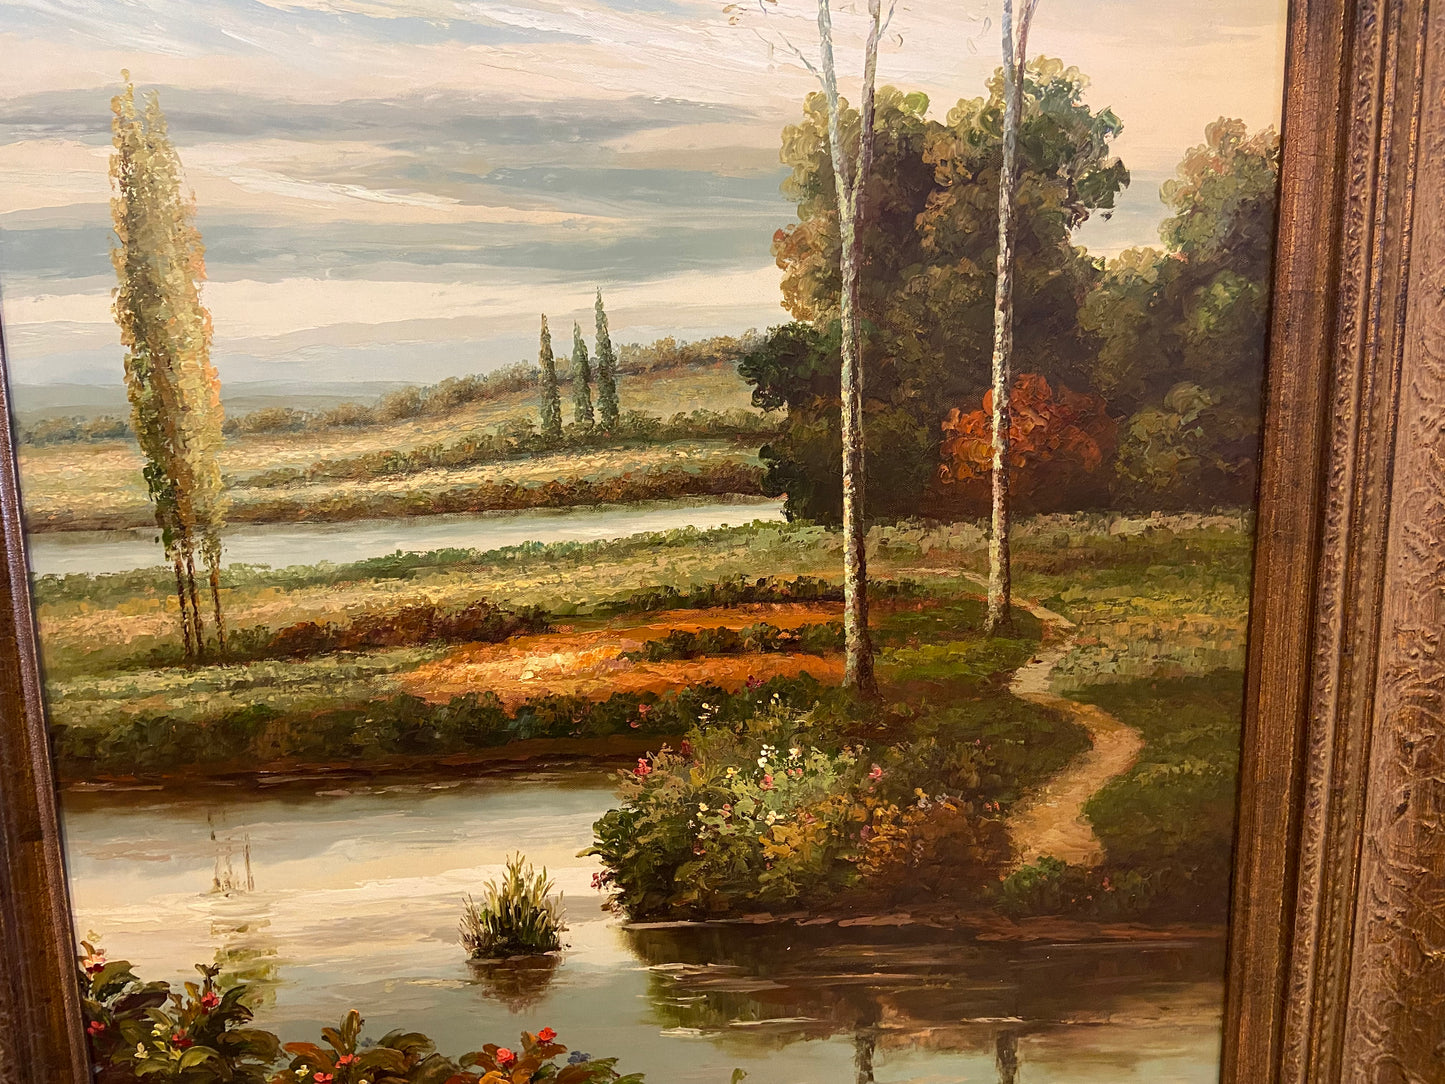 John K. Landscape Painting (27075)